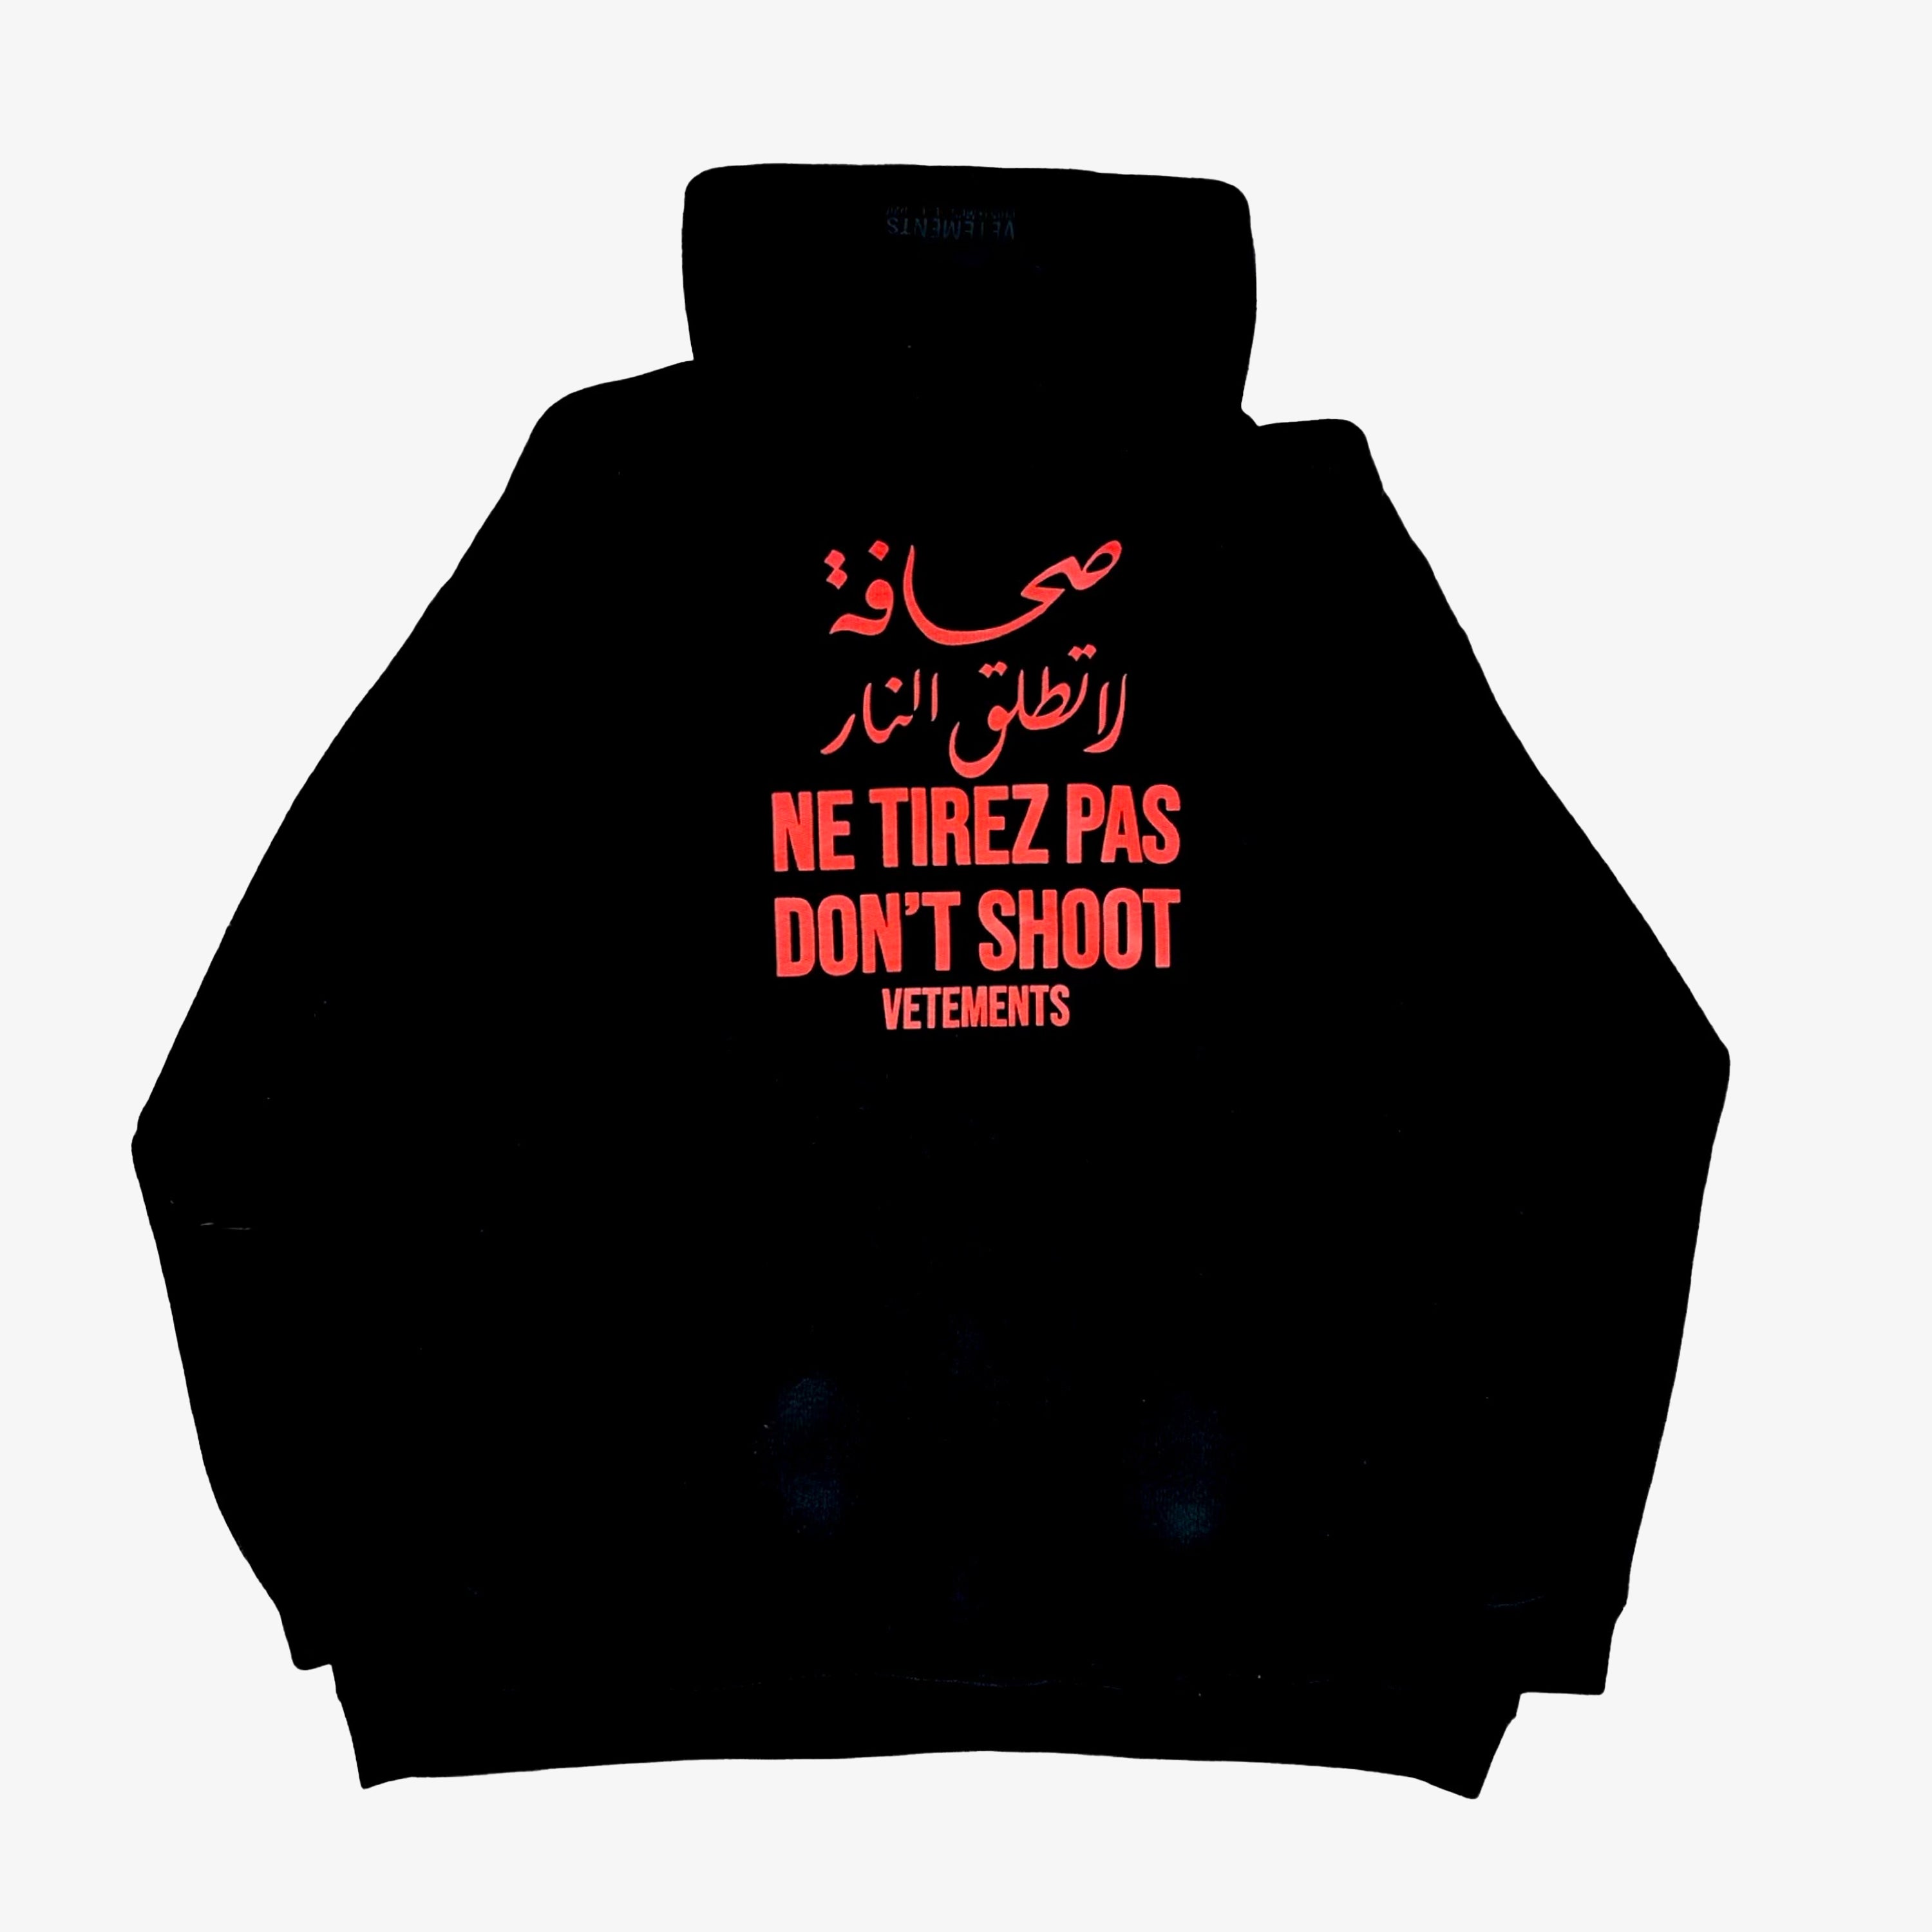 DON'T SHOOT HOODIE